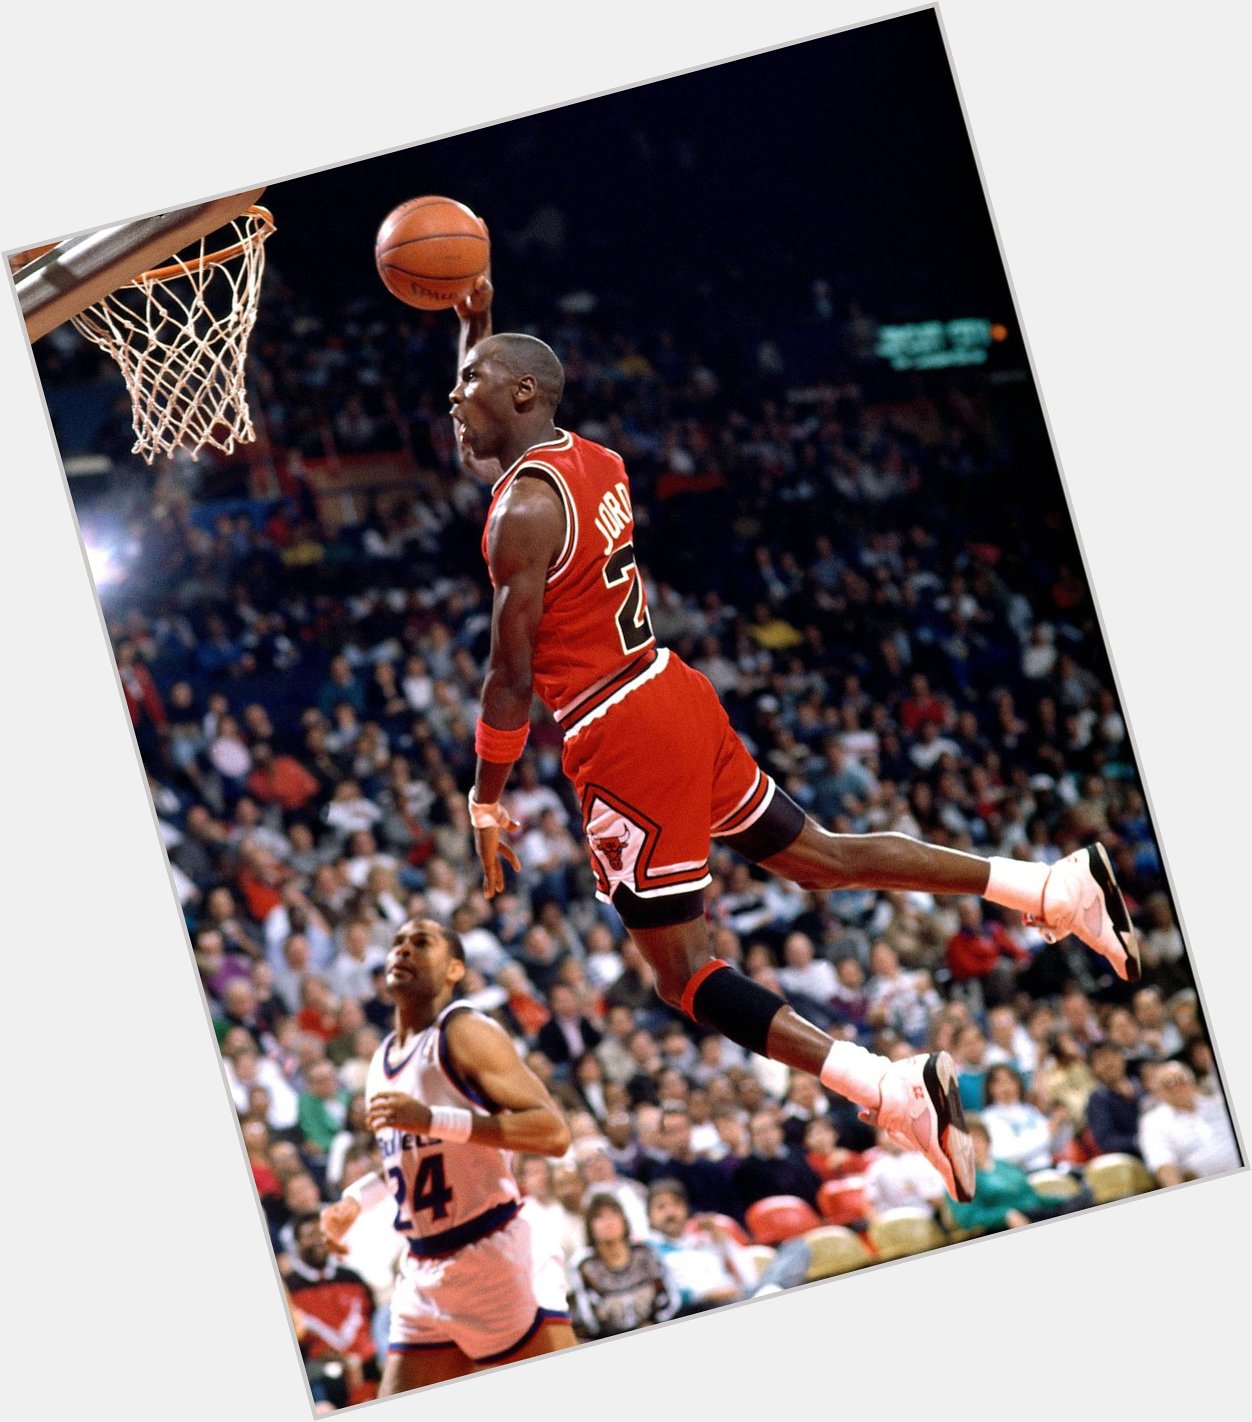 The turns 56 today

Happy Birthday, Michael Jordan! 